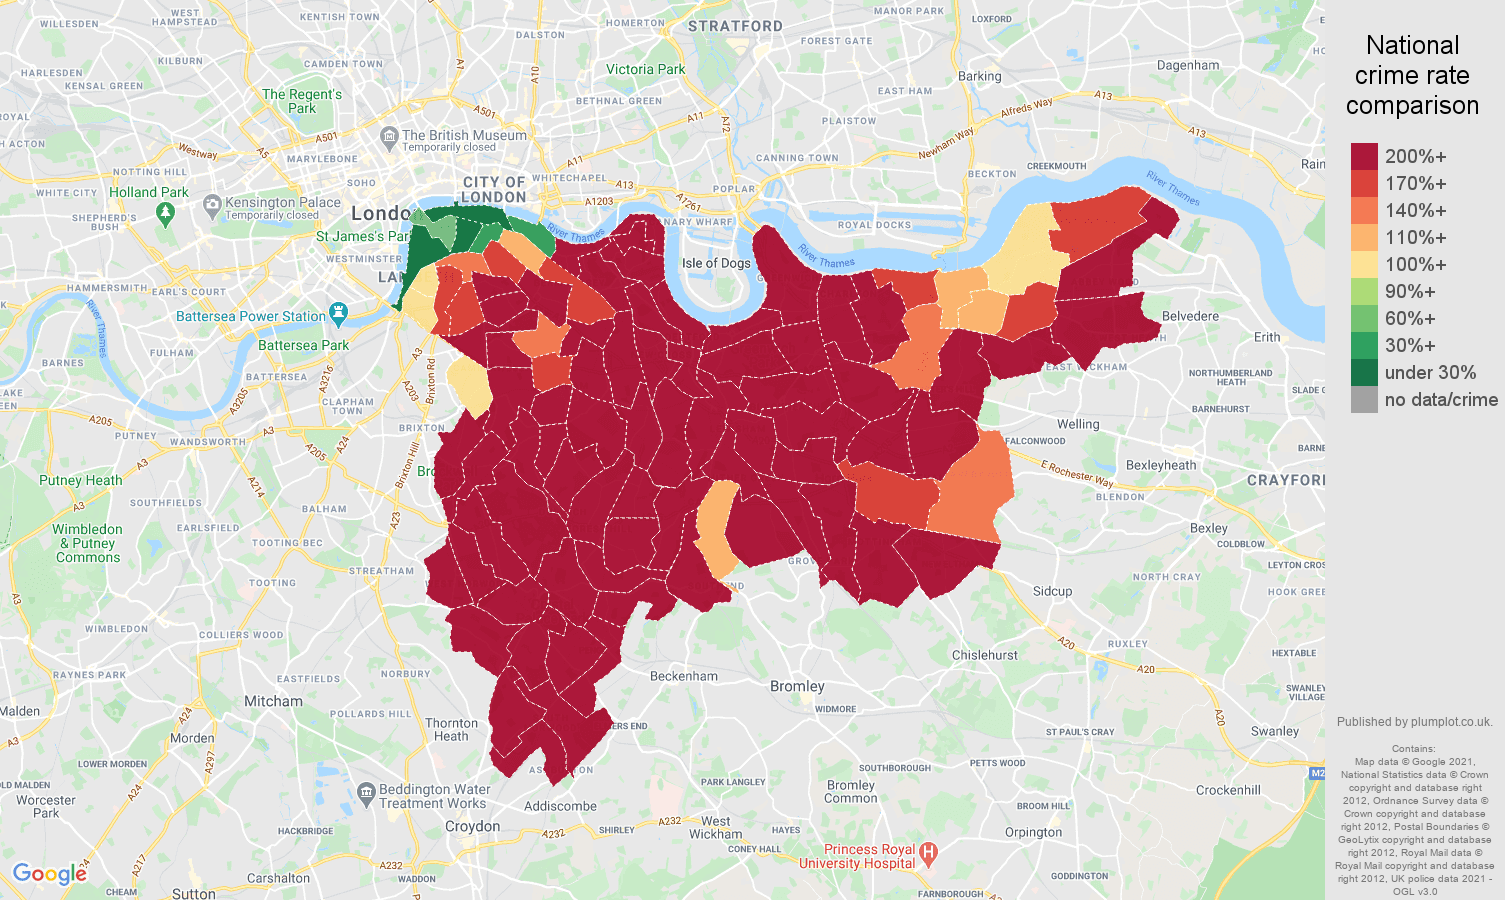 South East London vehicle crime rate comparison map